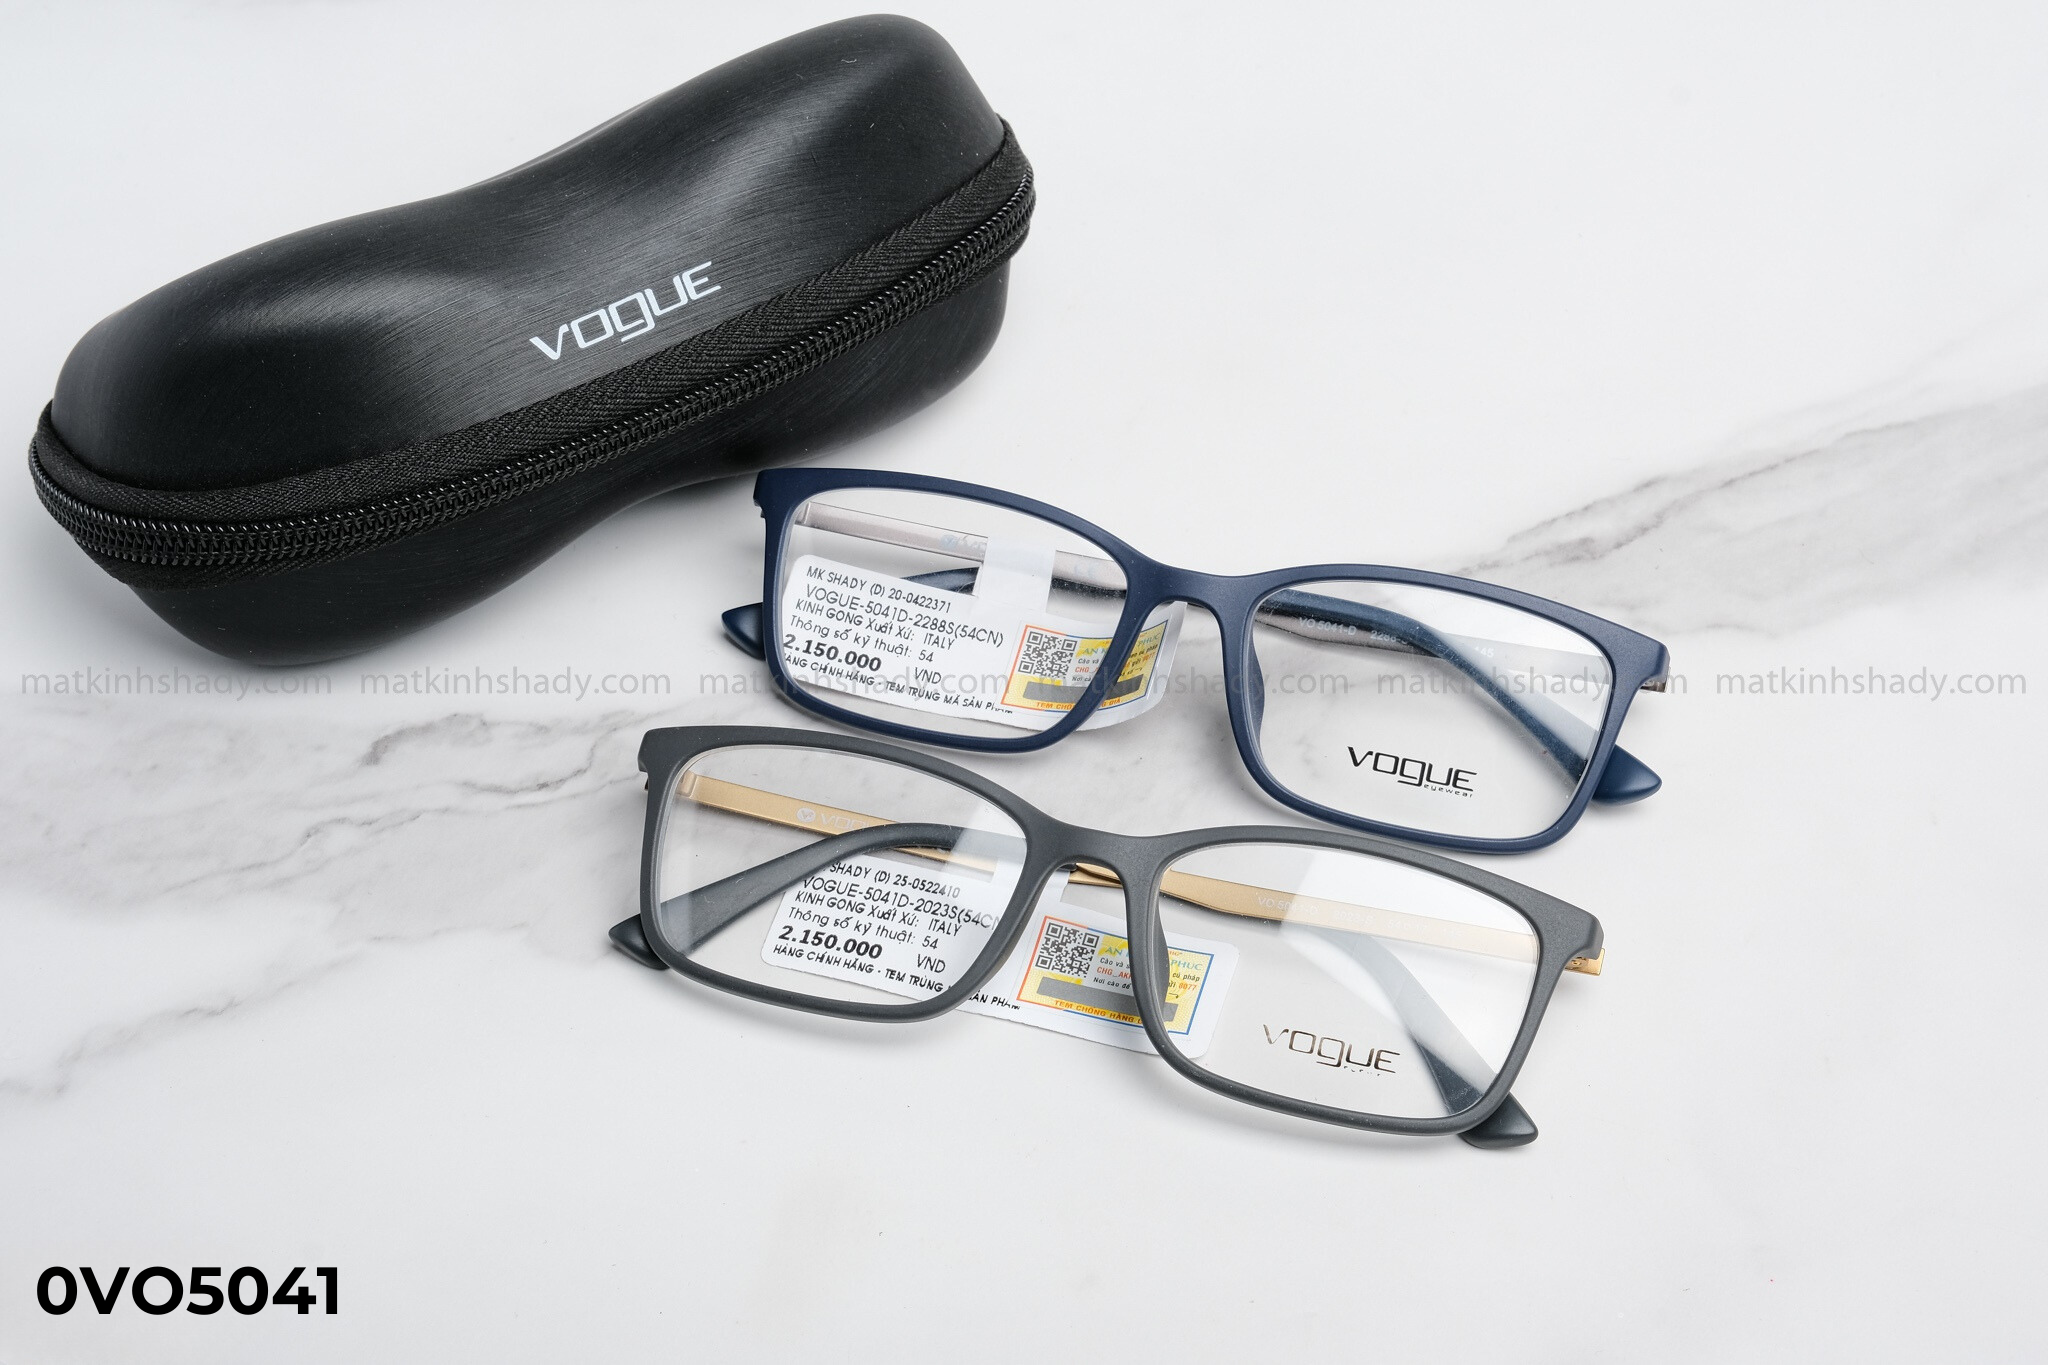  Vogue Eyewear - Glasses - 0VO5041 